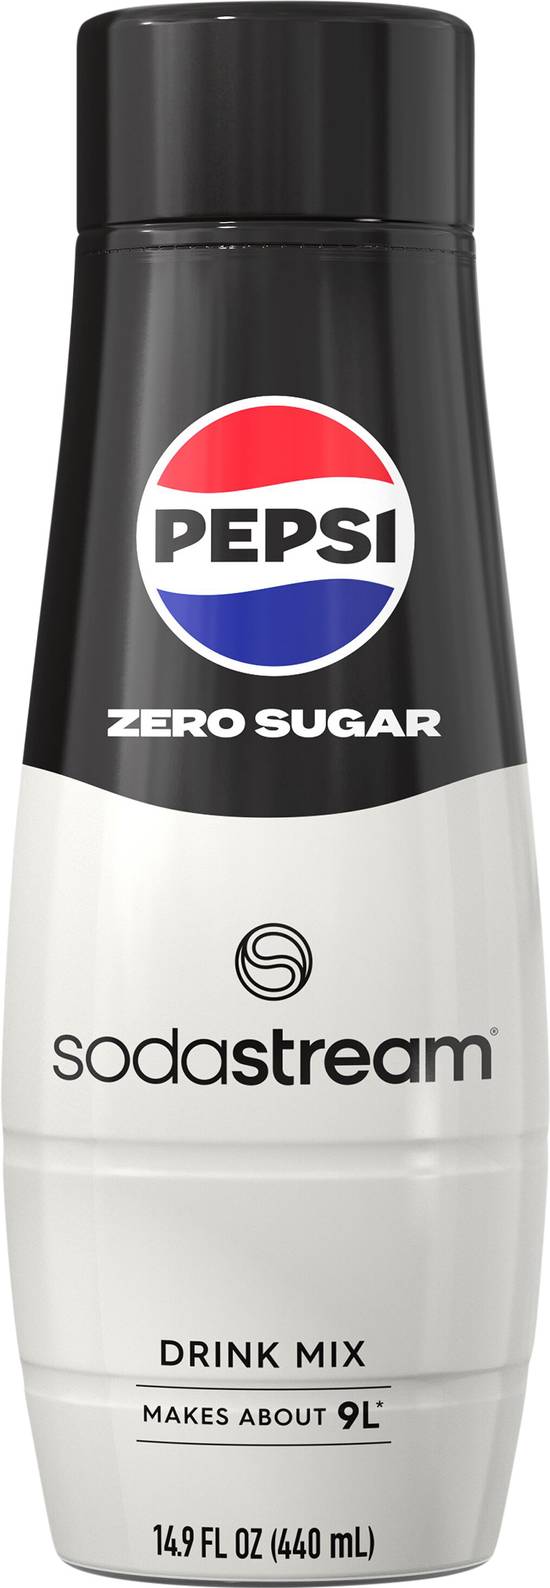 Pepsi Sodastream Zero Sugar Beverage Mix (14.9 fl oz)